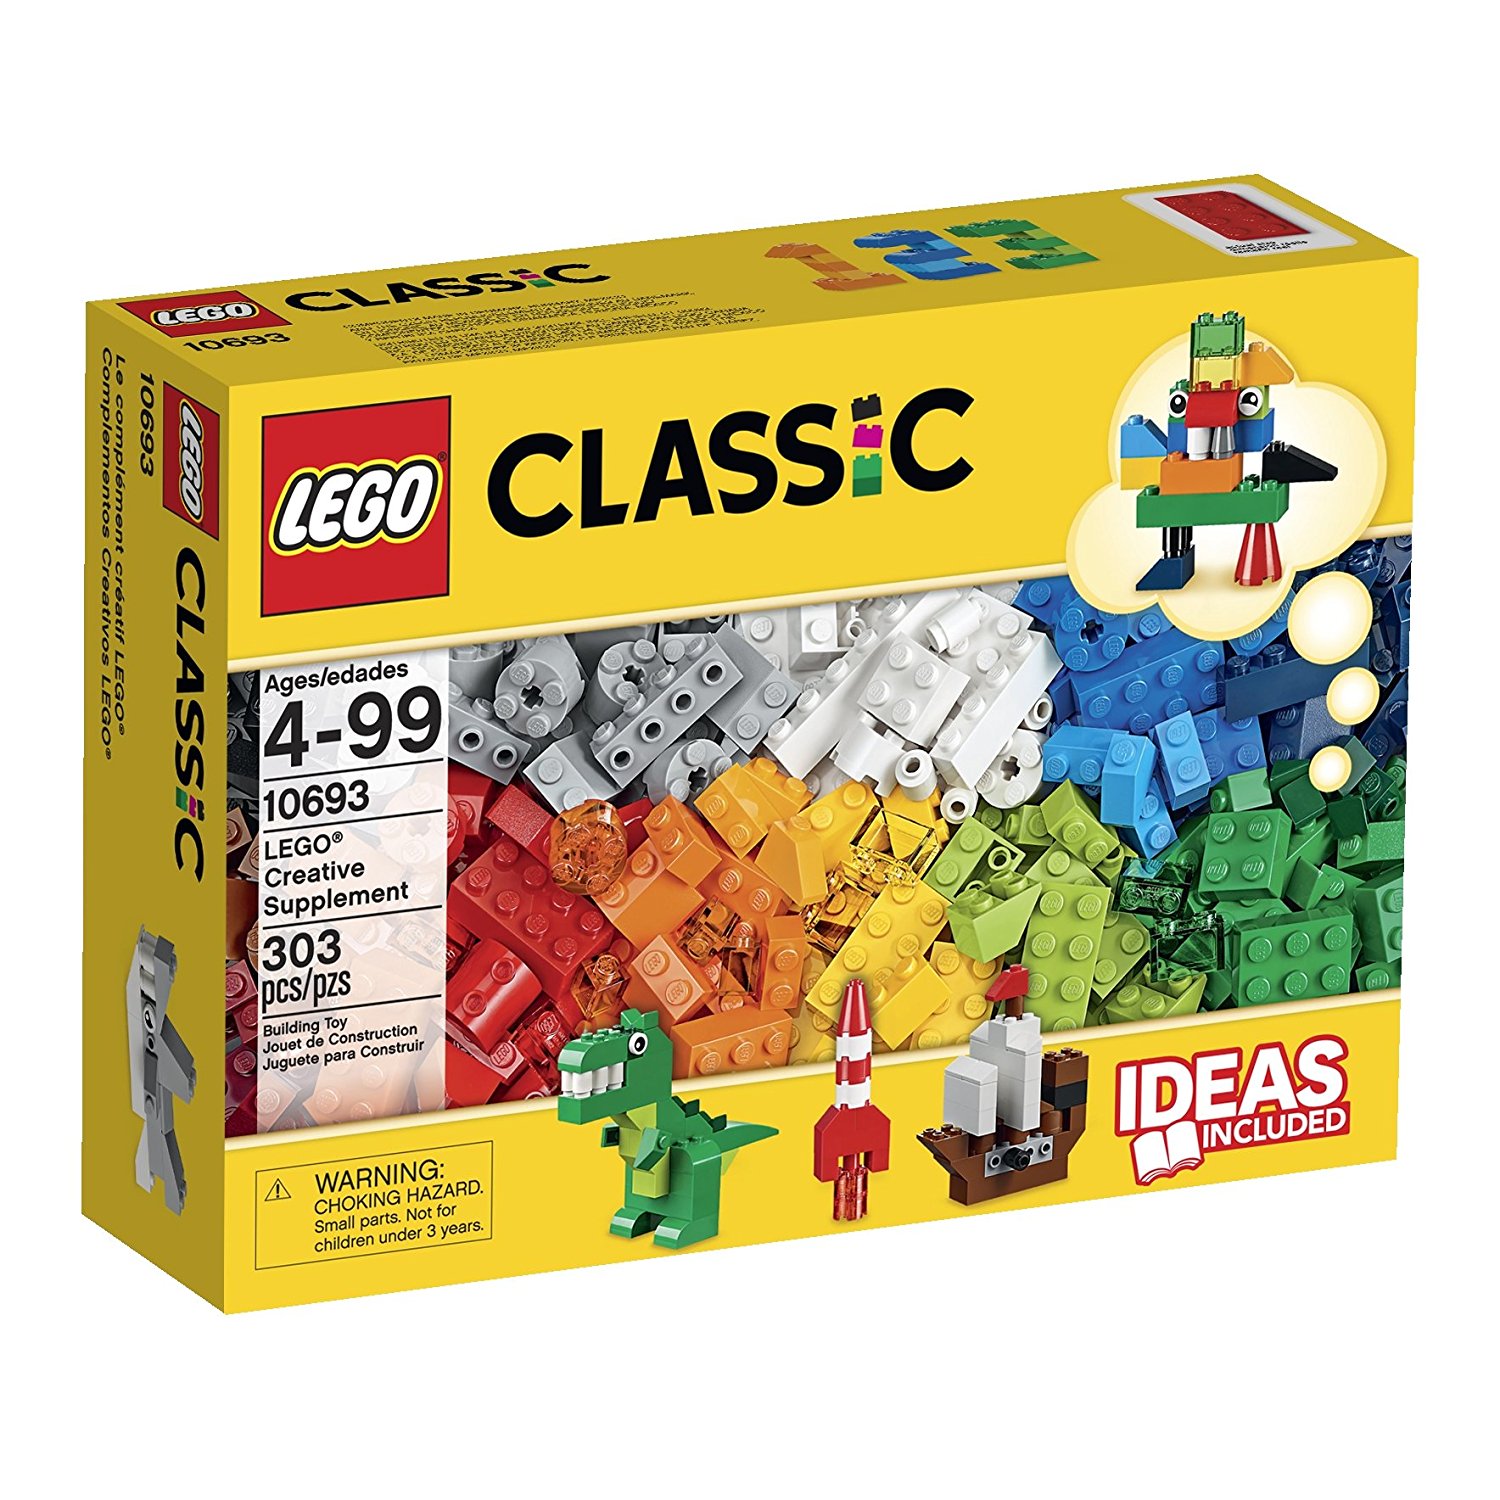 LEGO Classic Creative Supplement 10693 – Just $13.99!